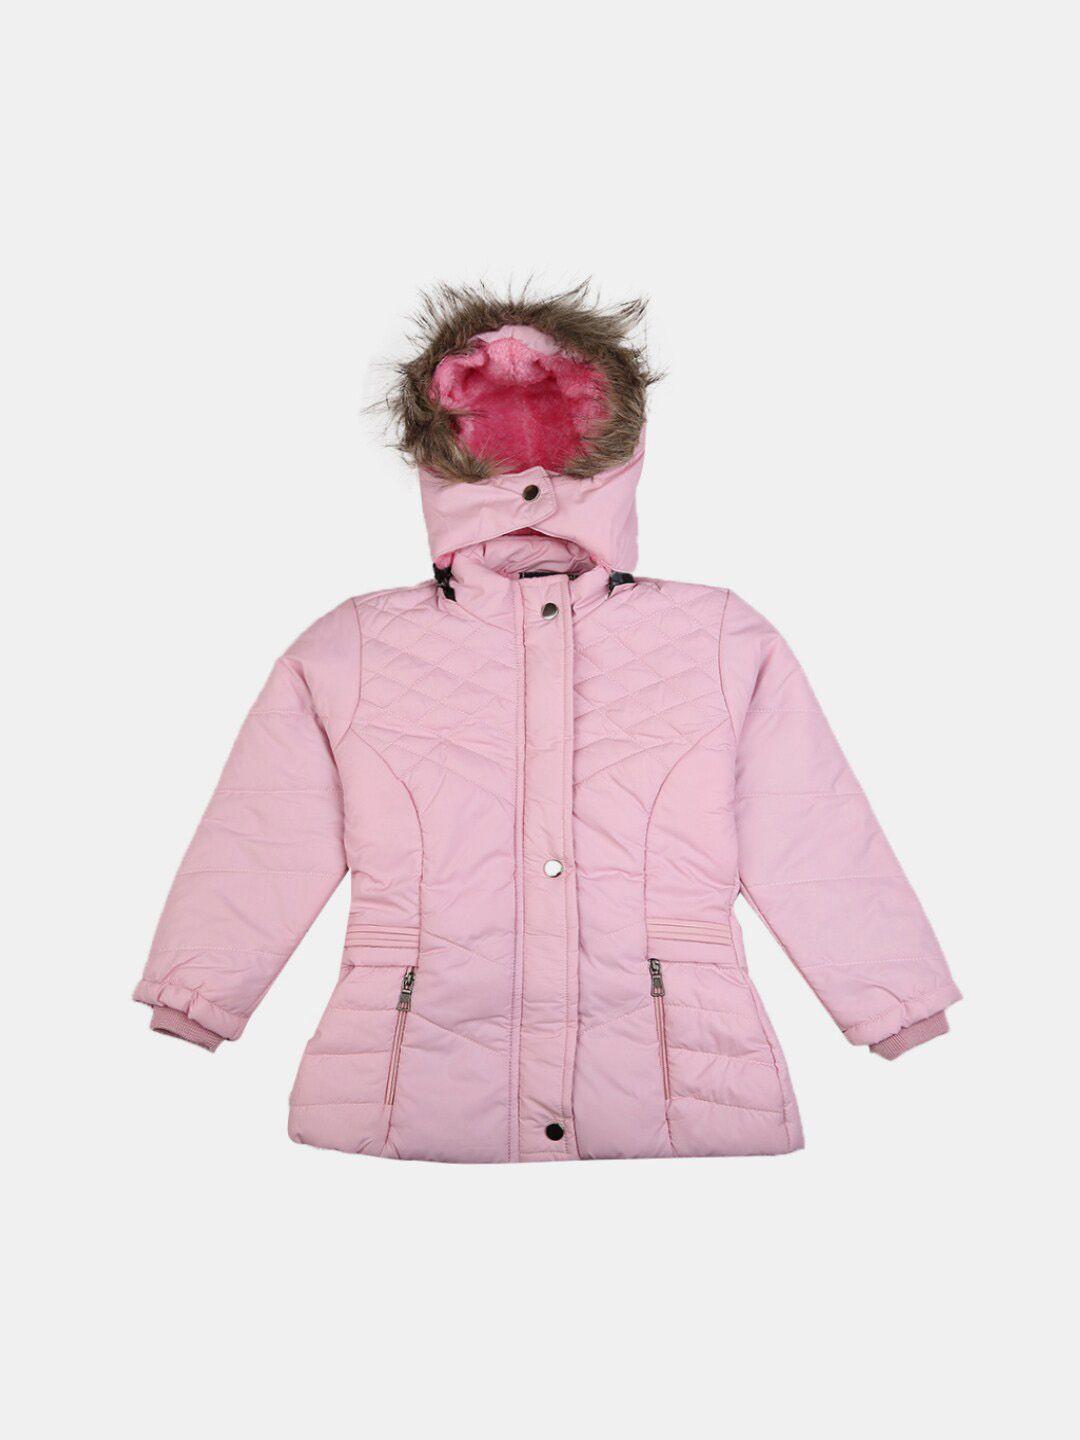 v-mart boys pink brown acrylic lightweight parka hooded jacket